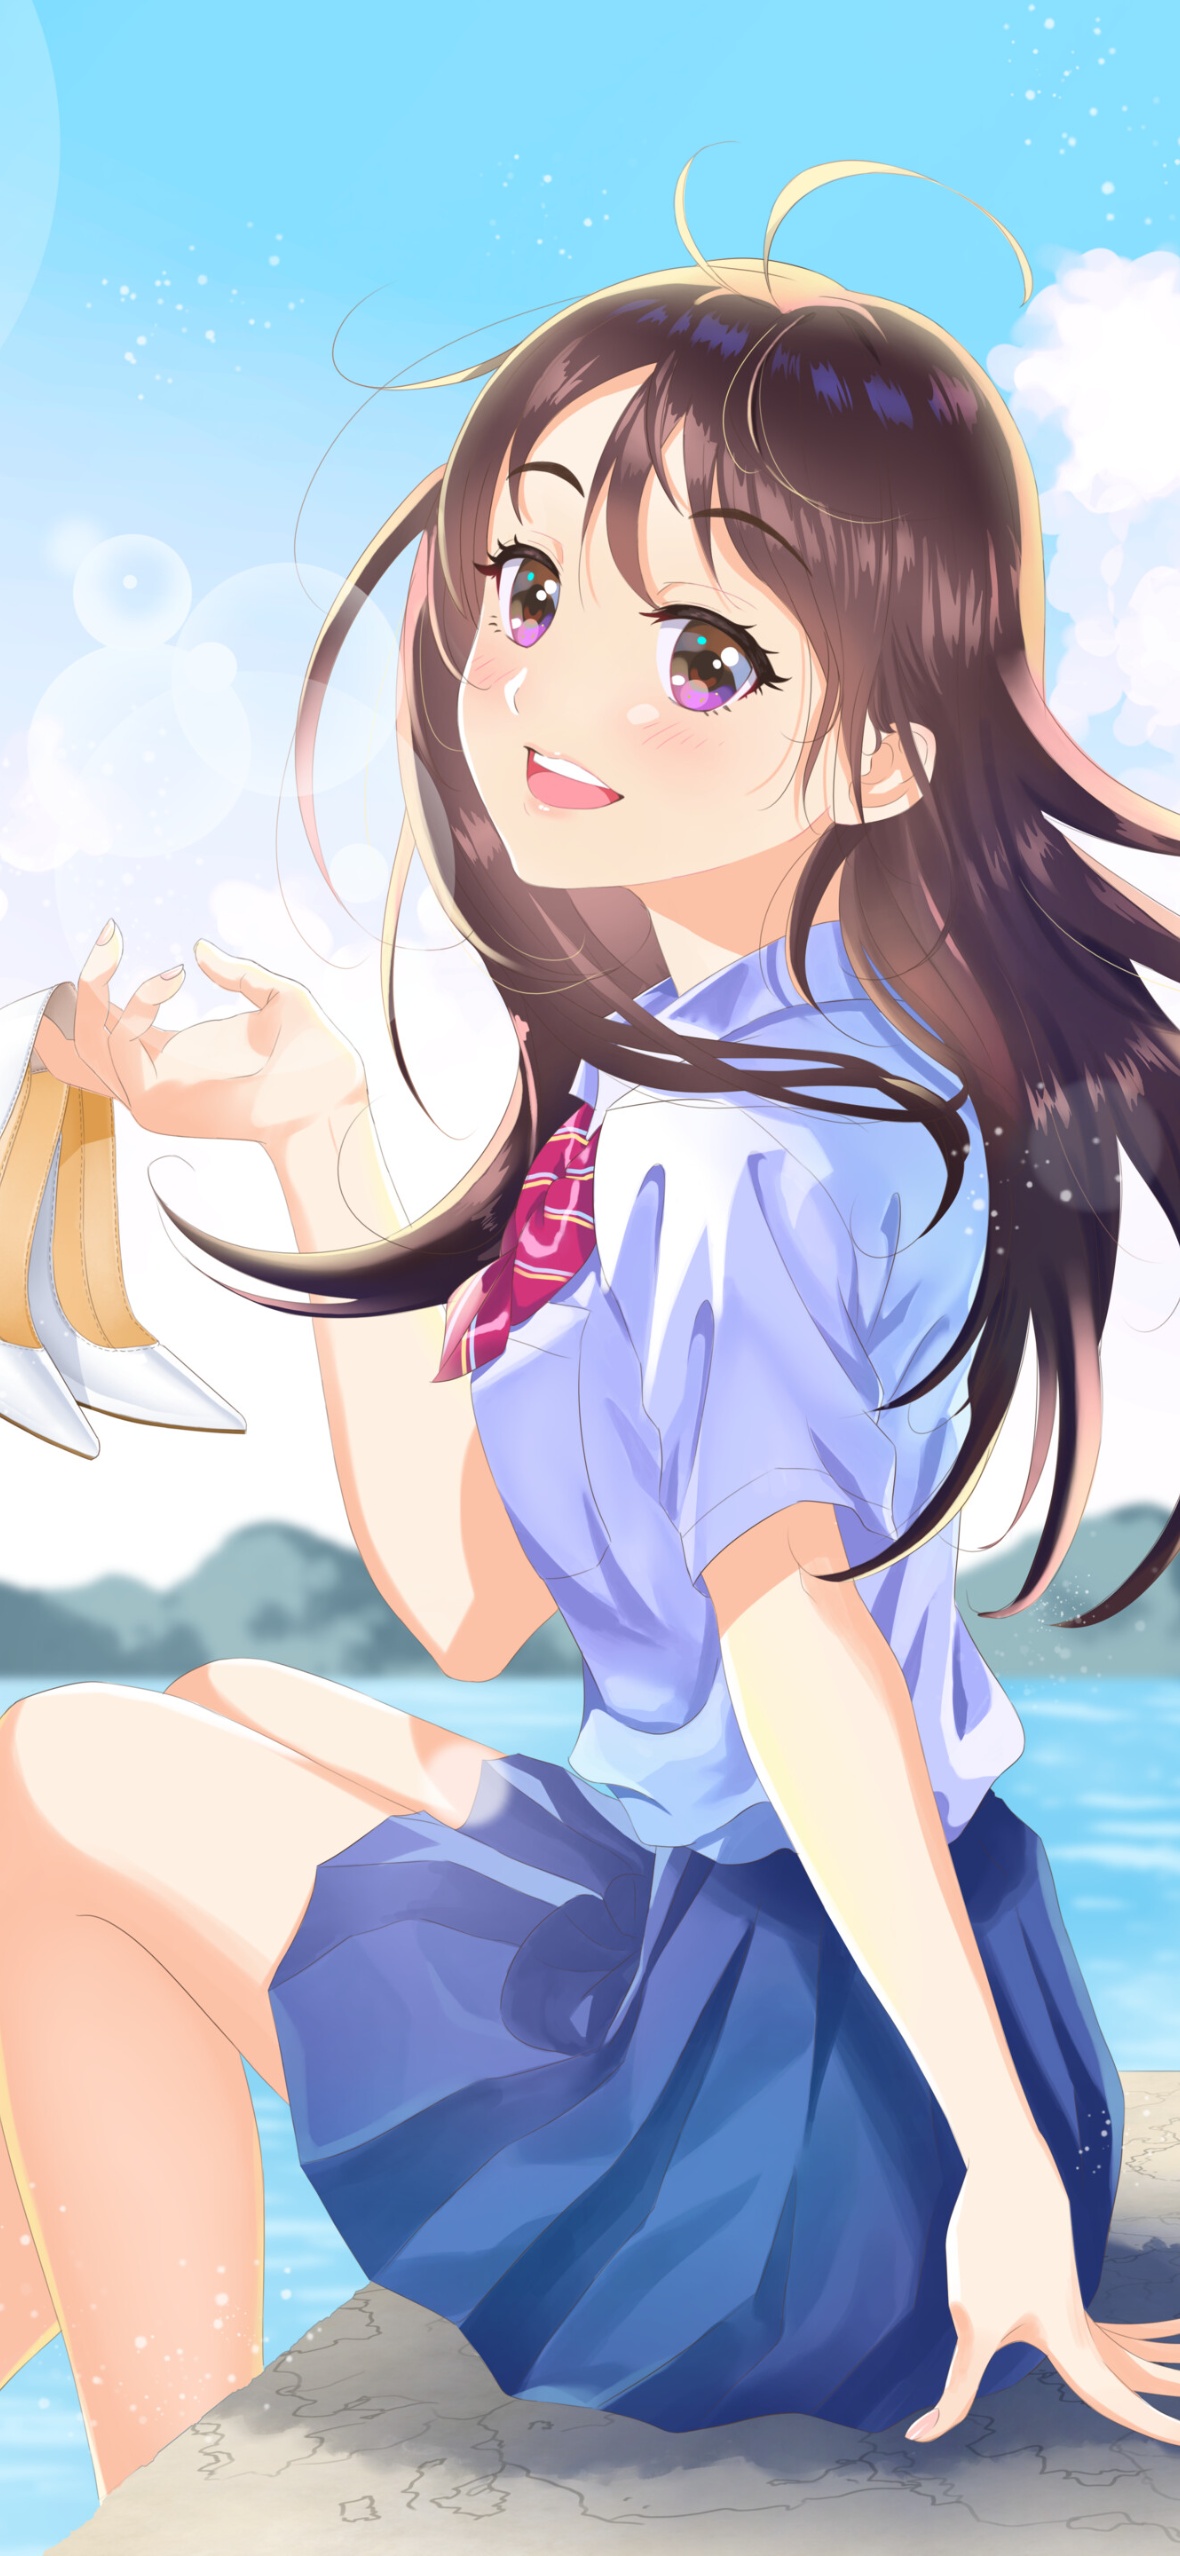 Cute Anime Girl Wallpaper HD For iPhone